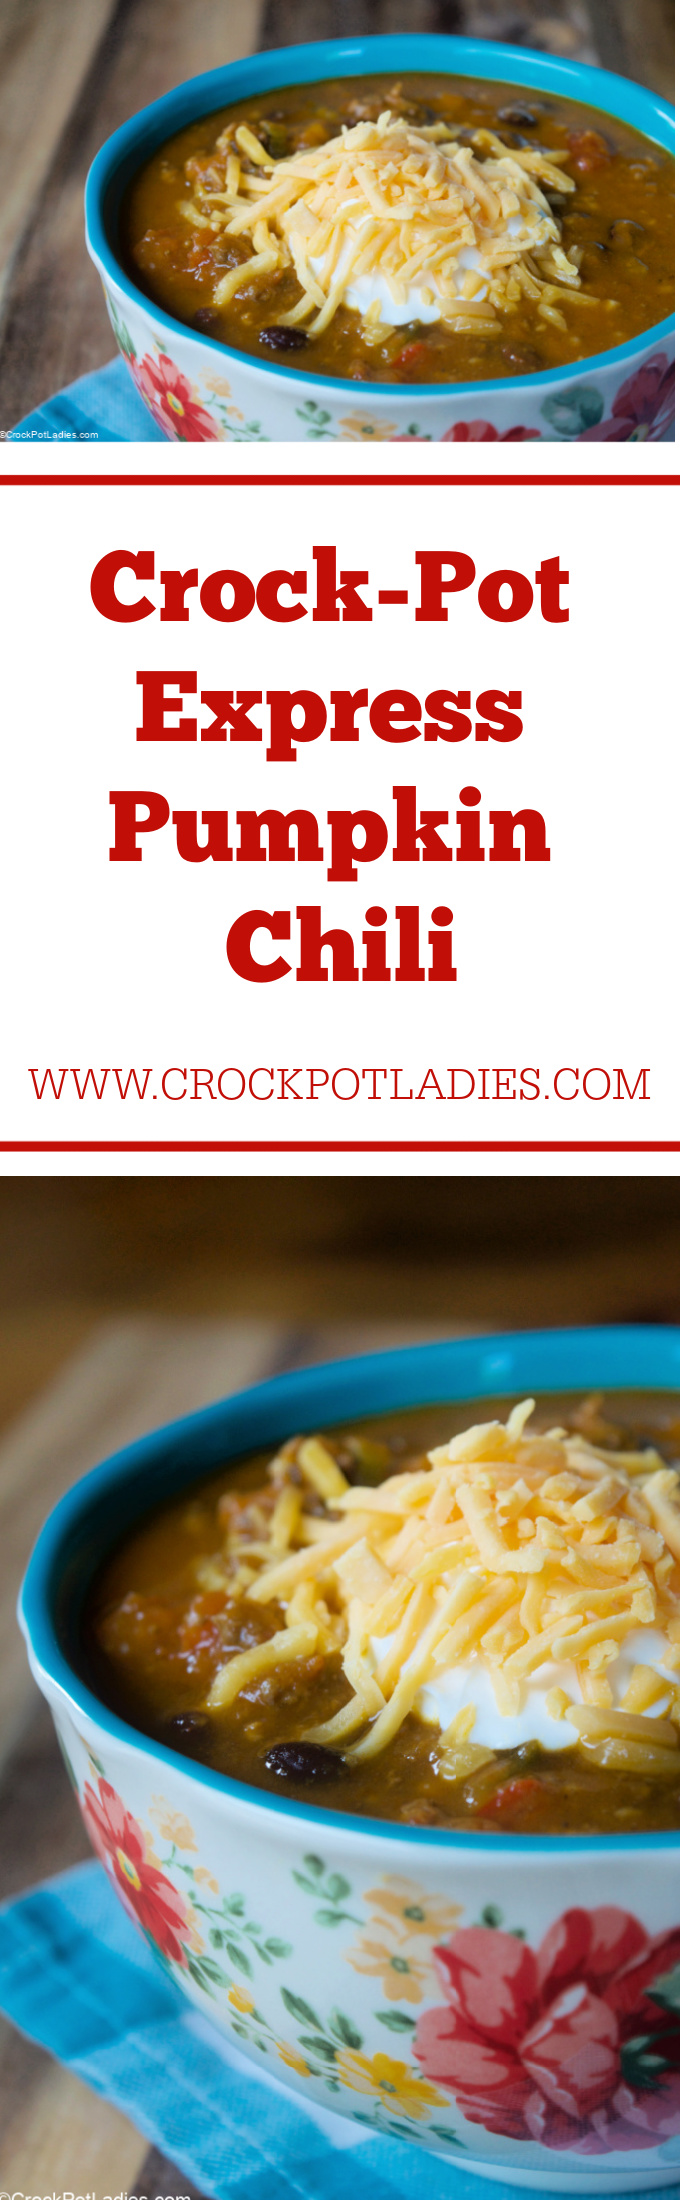 Crock-Pot Express Pumpkin Chili